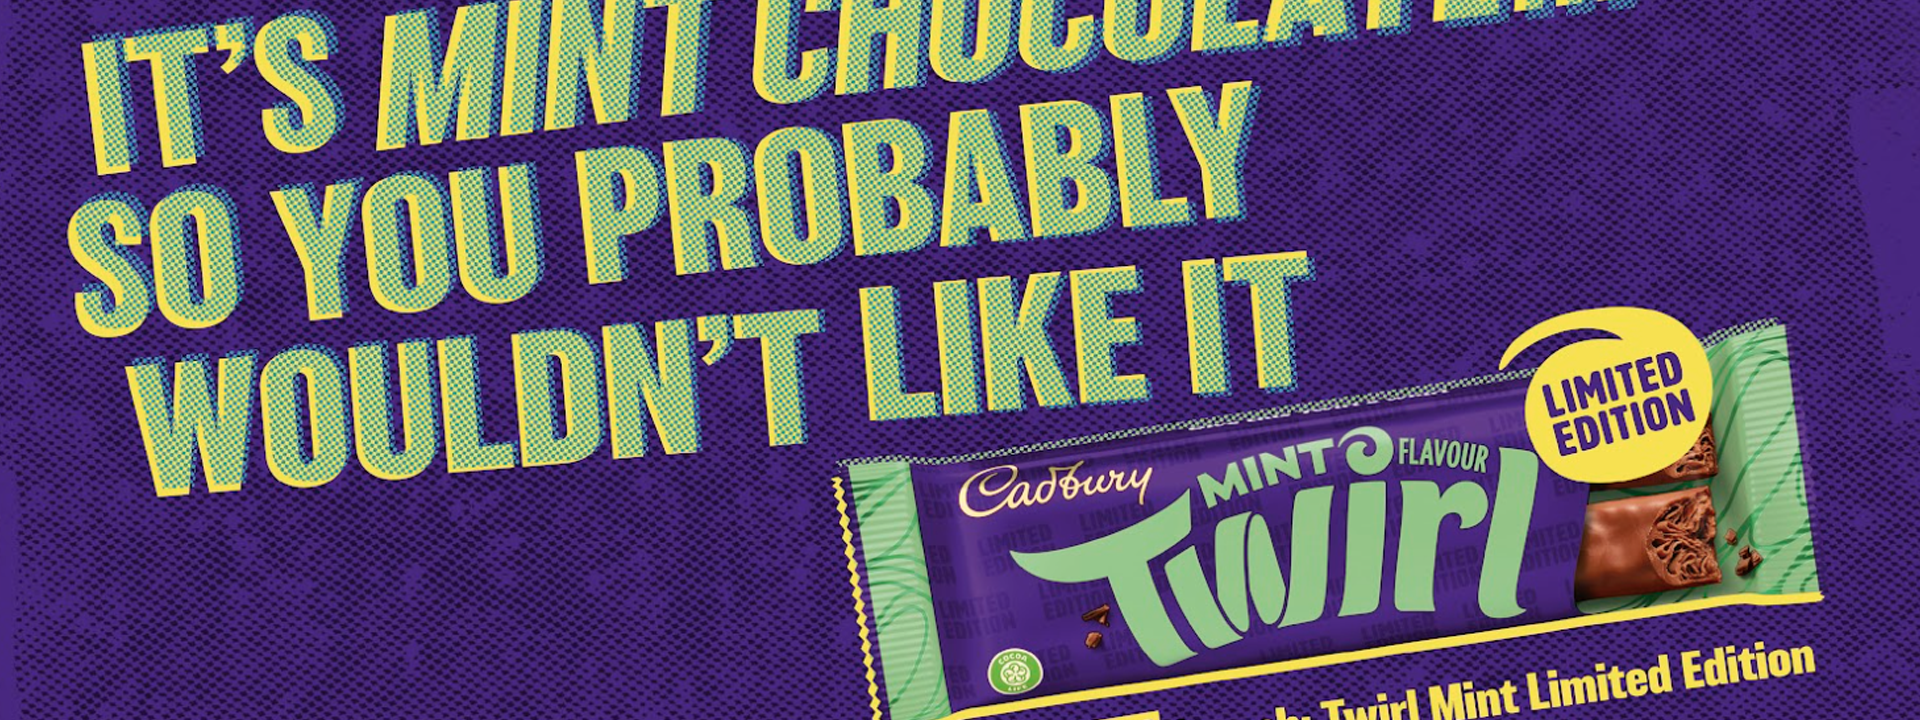 Cadbury MINT Twirl